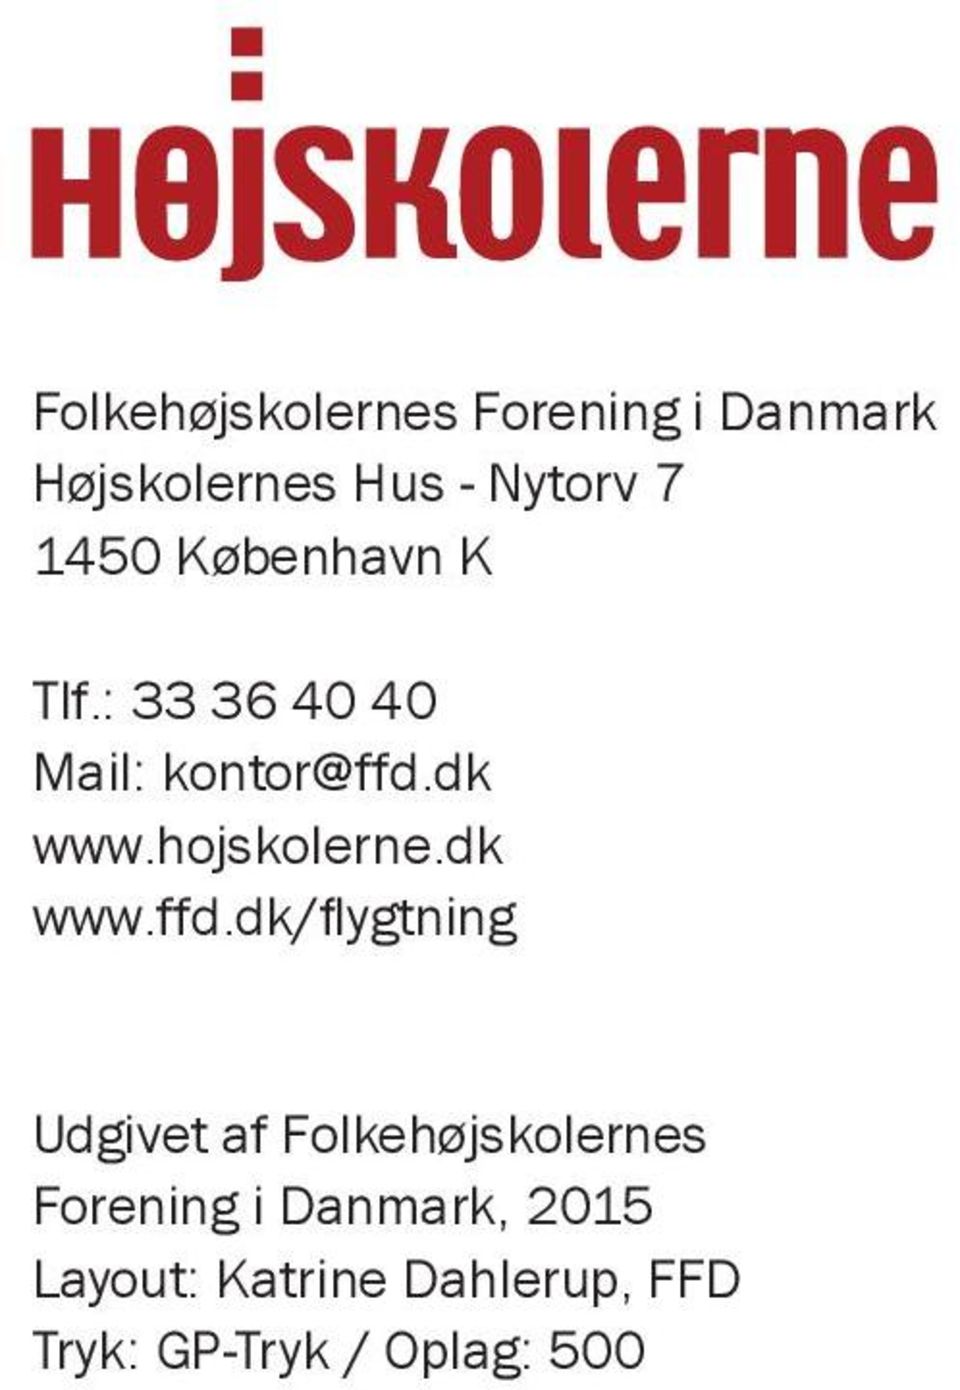 hojskolerne.dk www.ffd.